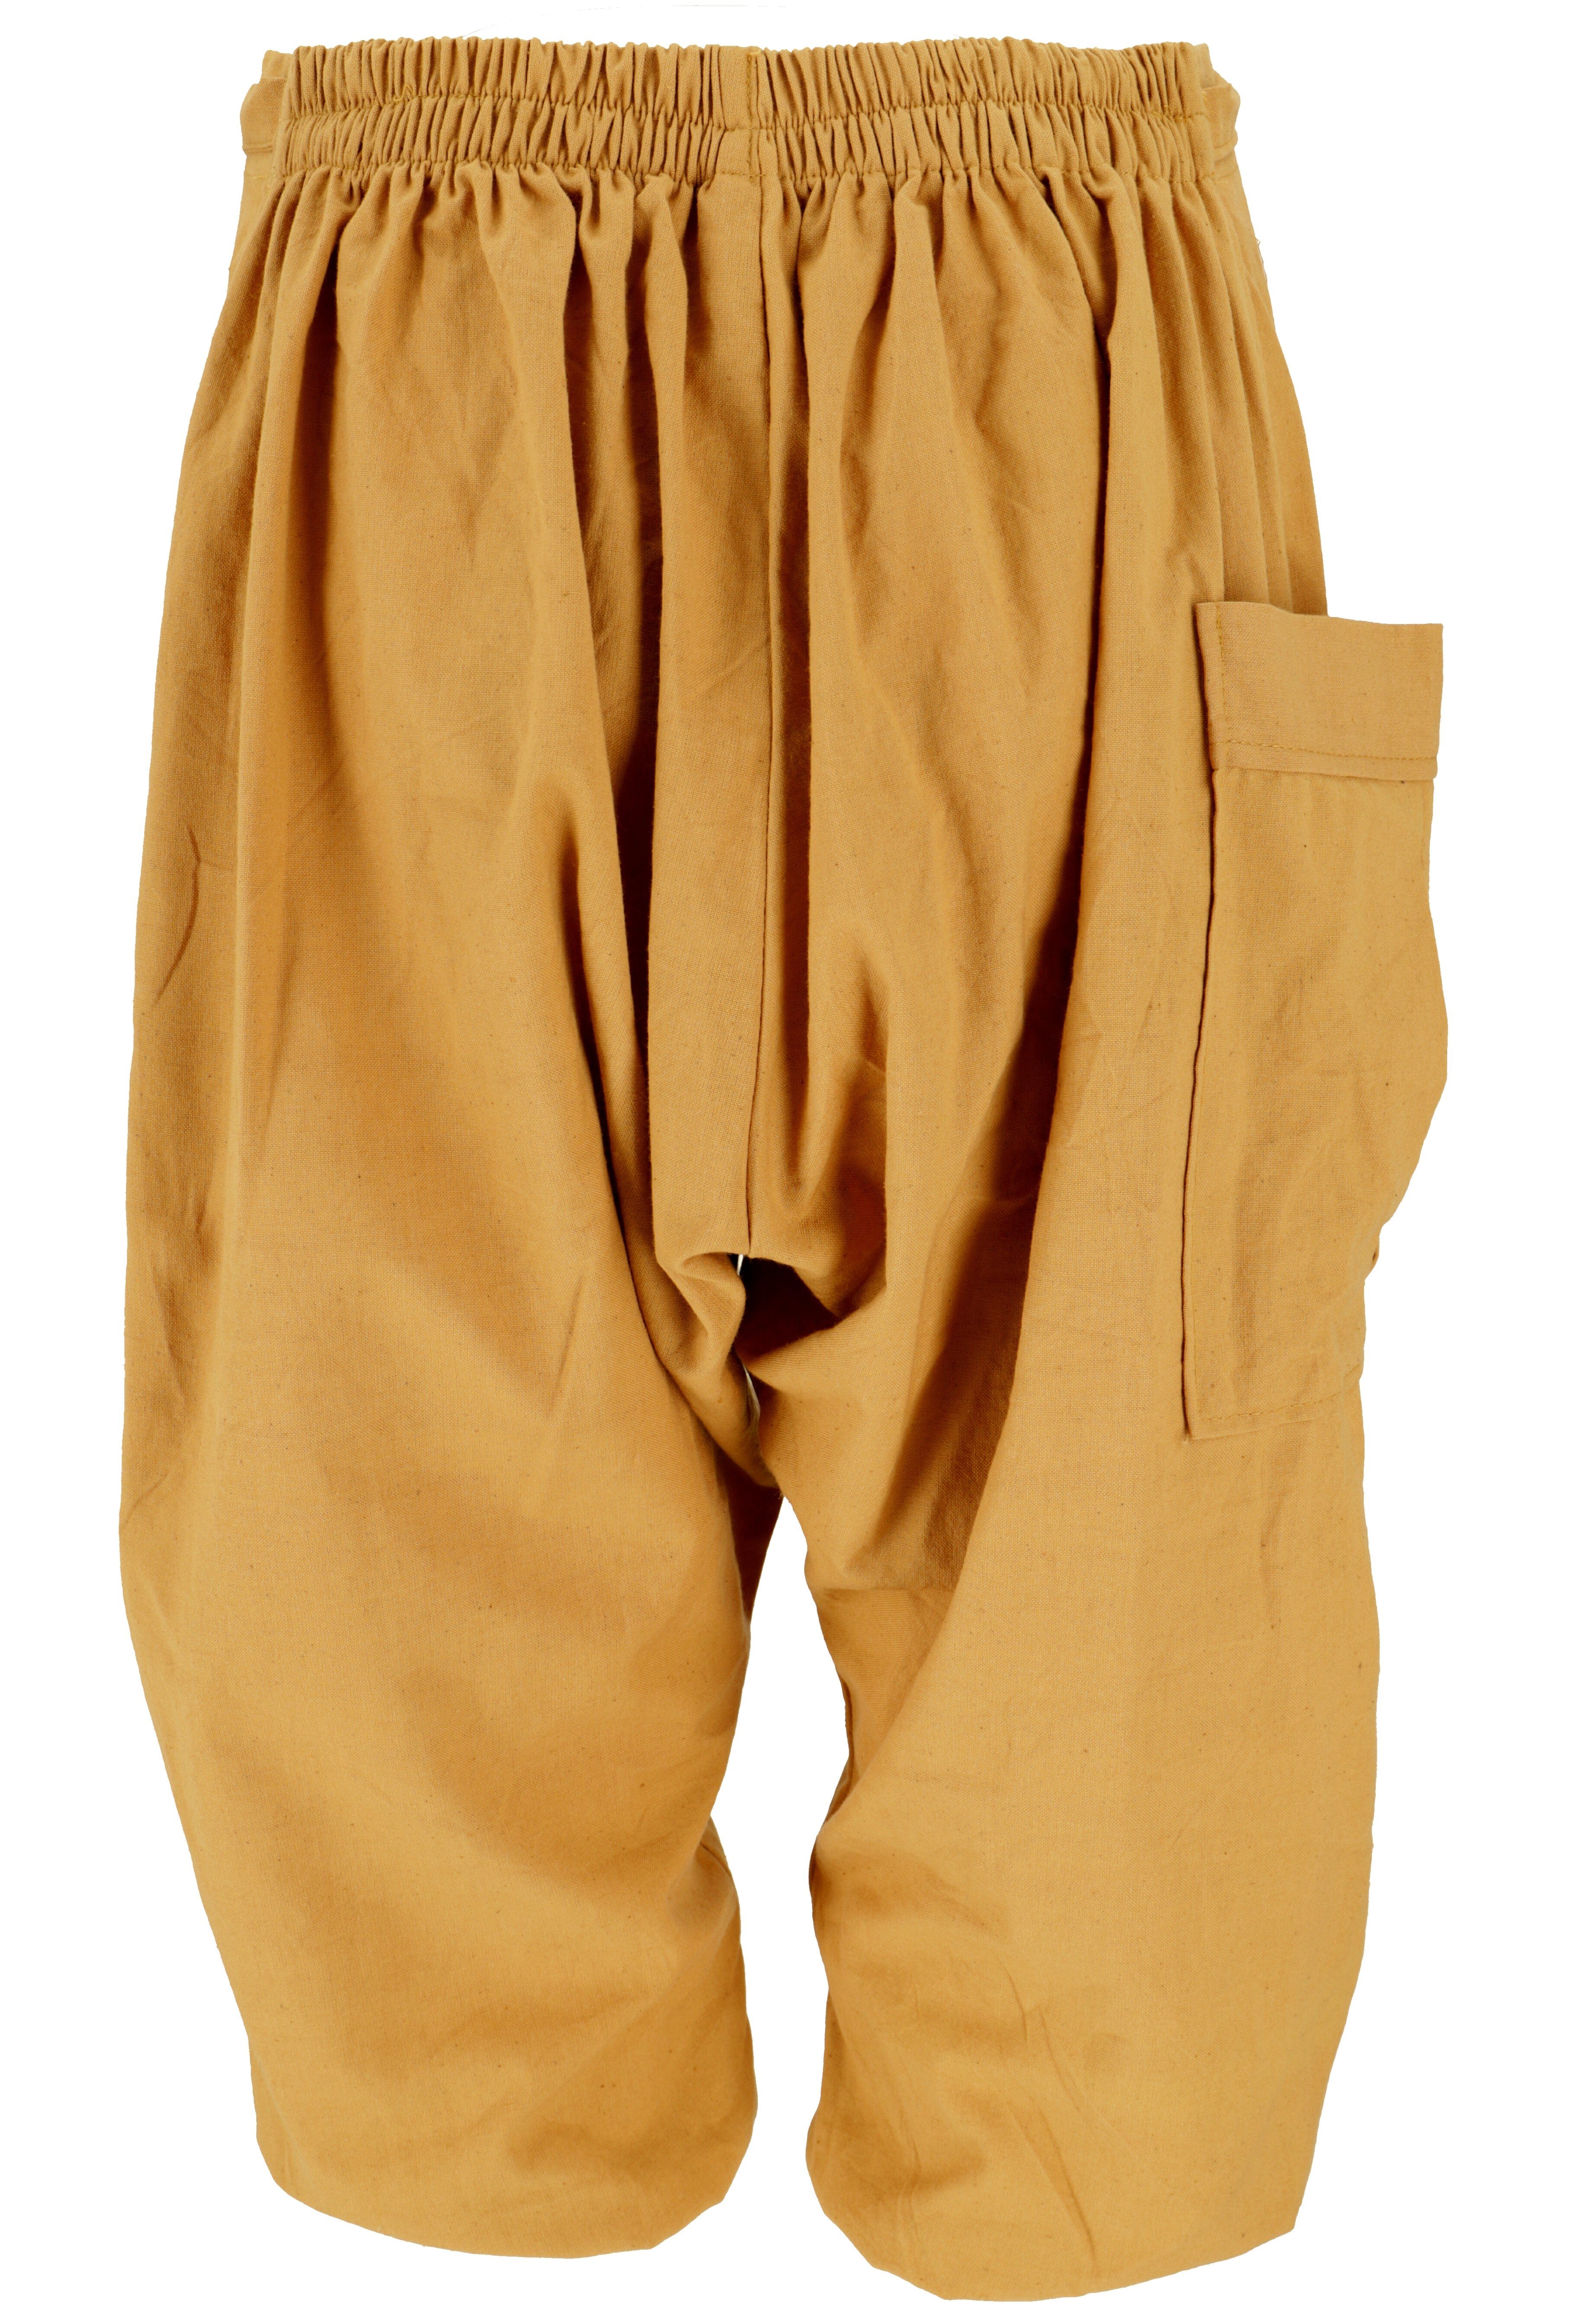 Bekleidung mango Hose Relaxhose Shorts, Ethno Guru-Shop Style, alternative Baggy - Sarouel